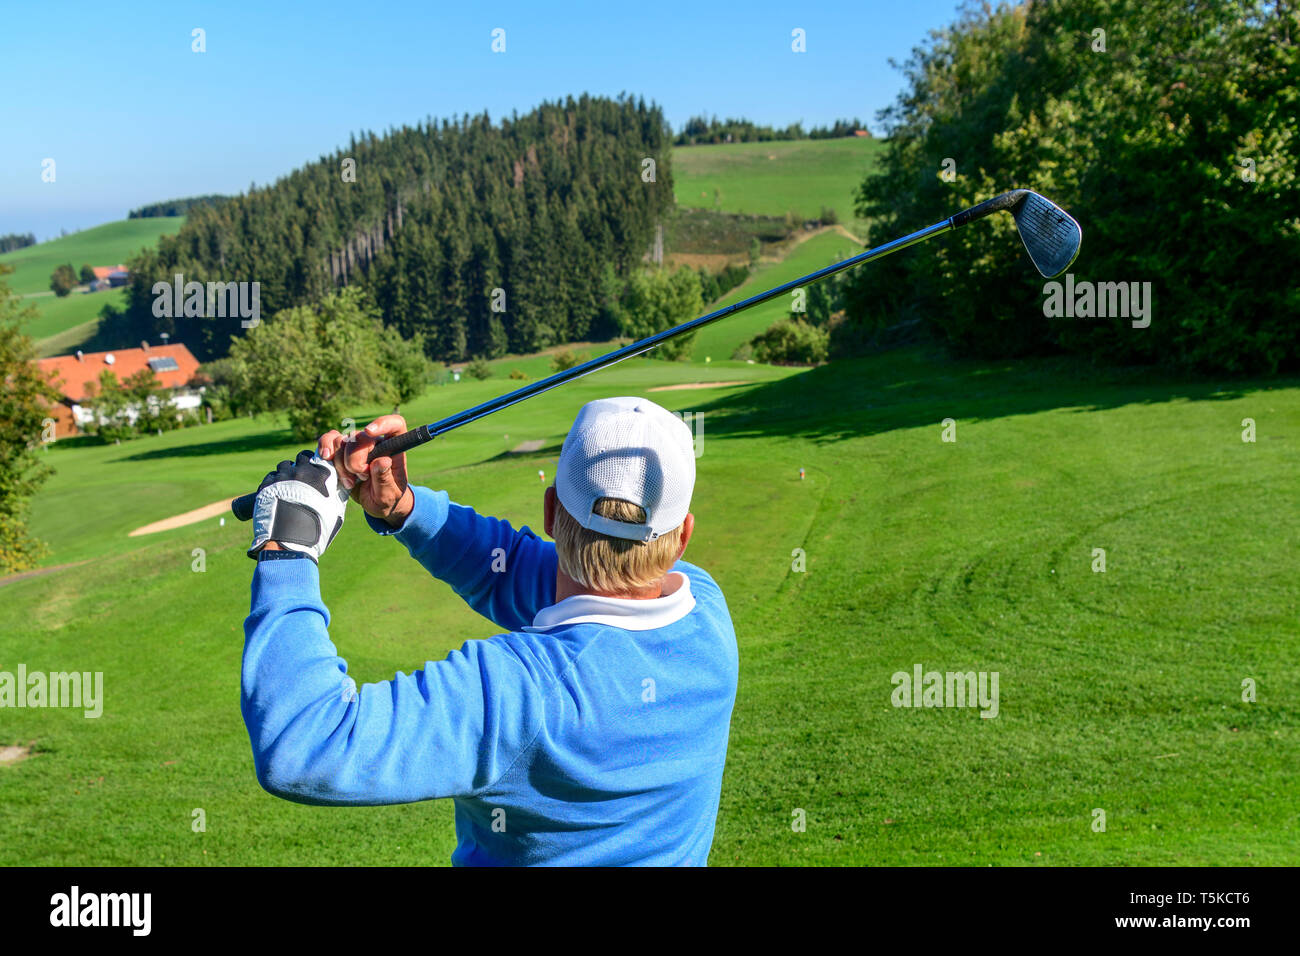 Golf player hitting a ball Stock Photo